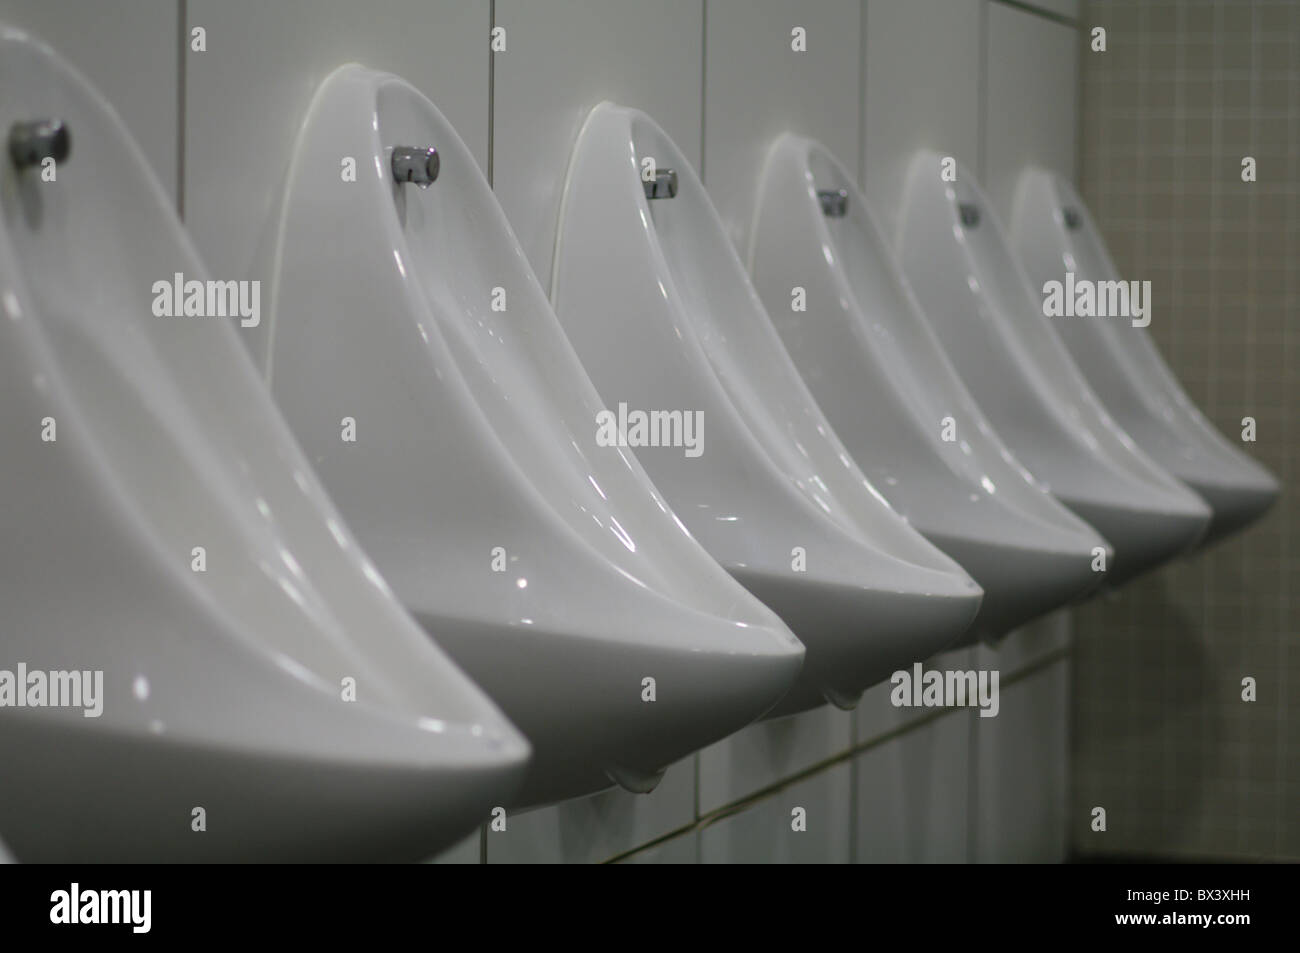 Row of urinals Stock Photo